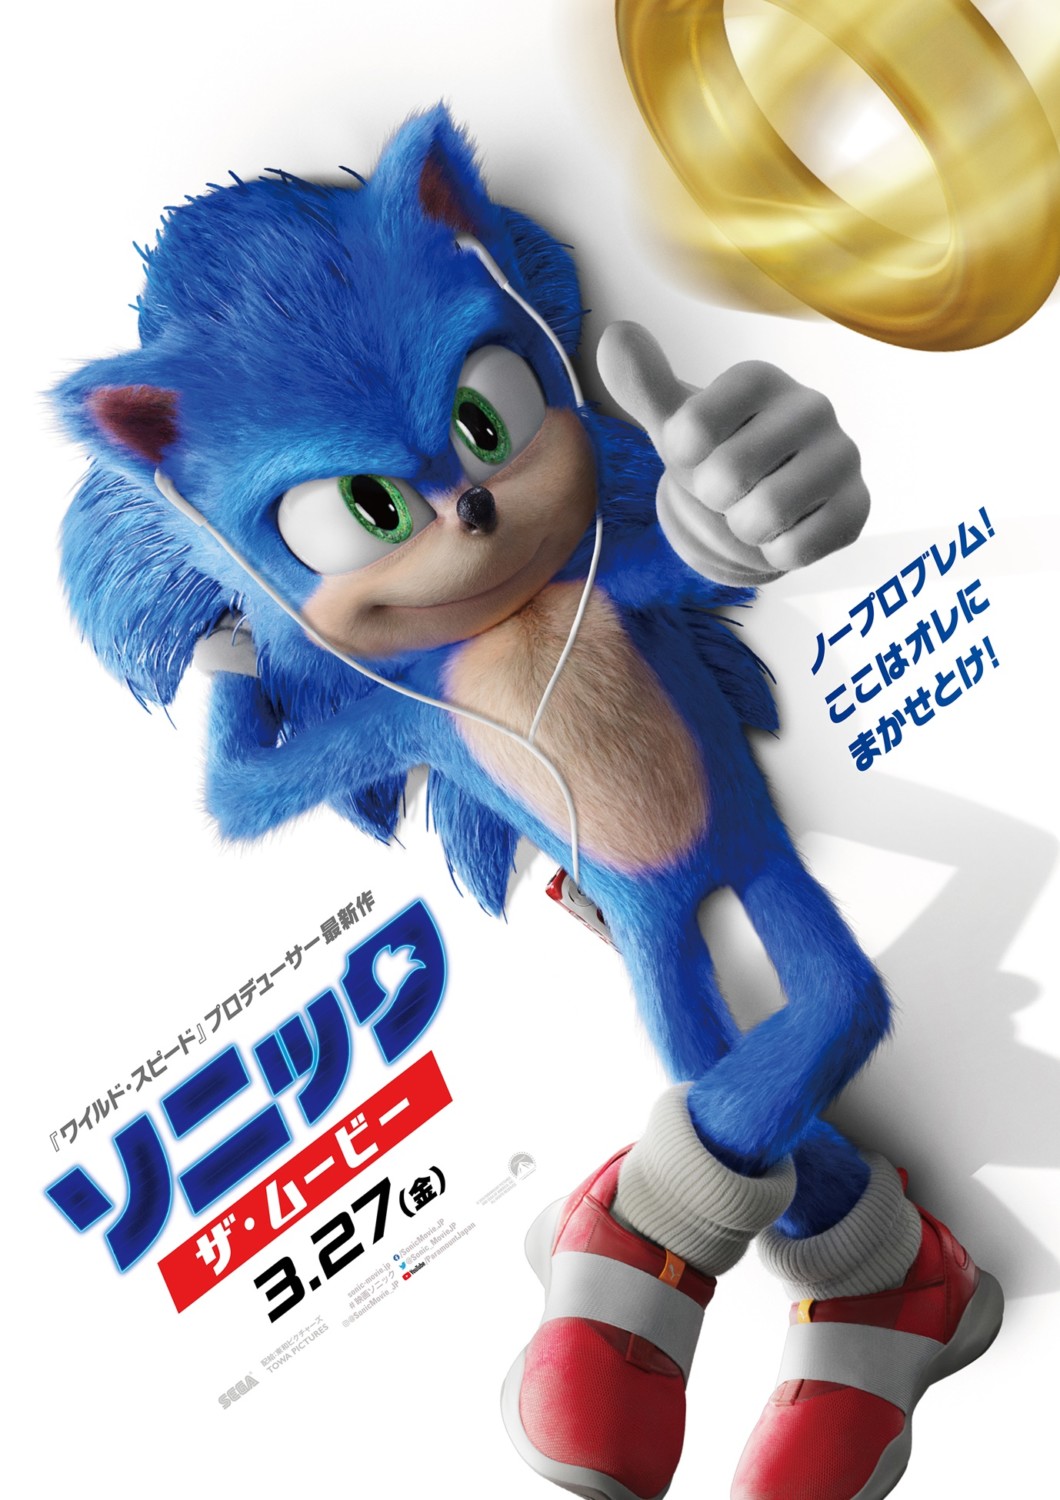 New Japanese Sonic 2 Poster